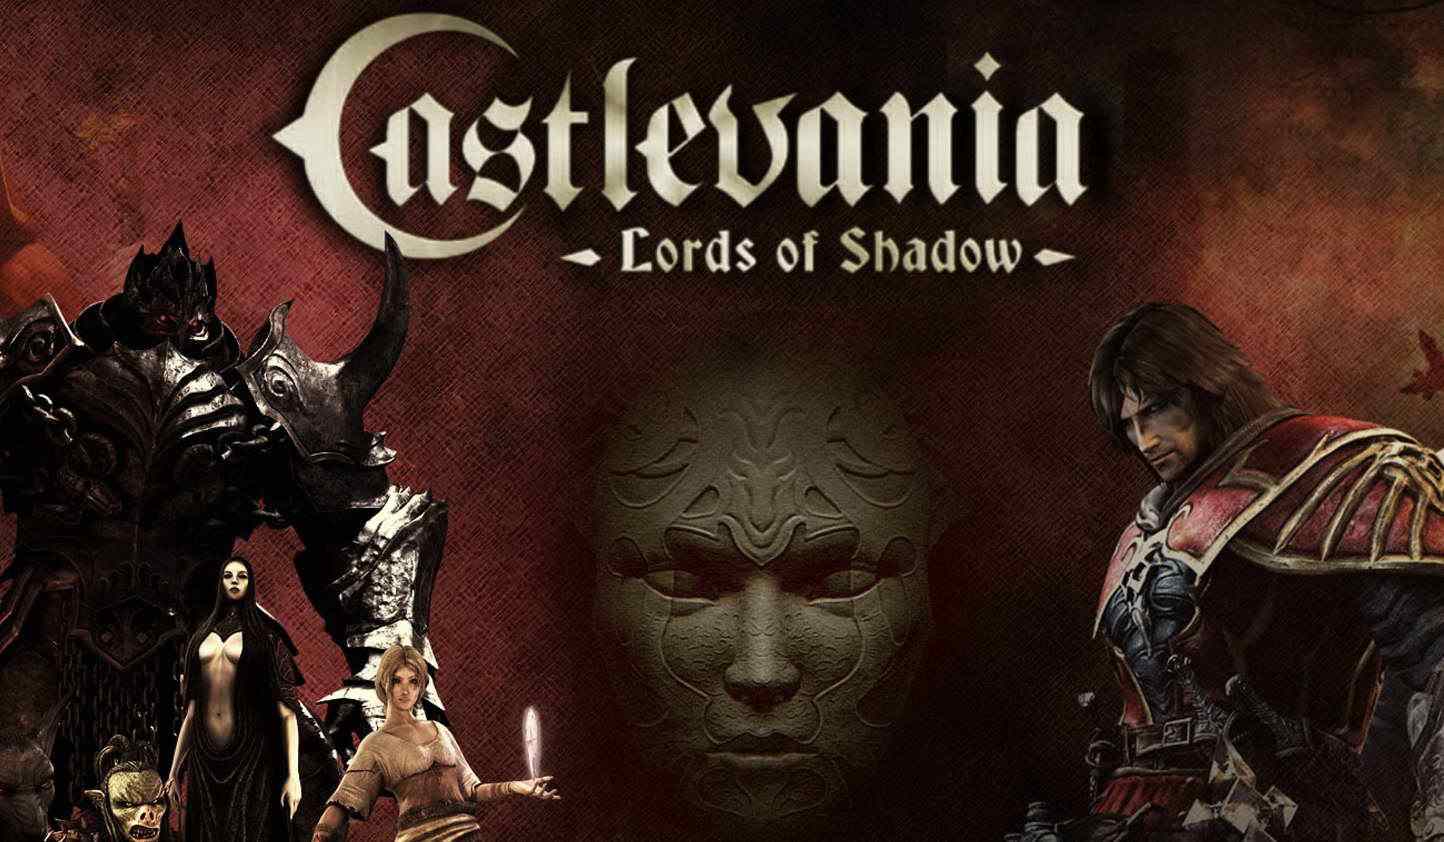 Castlevania: Lords of Shadow binkw32.dll missing